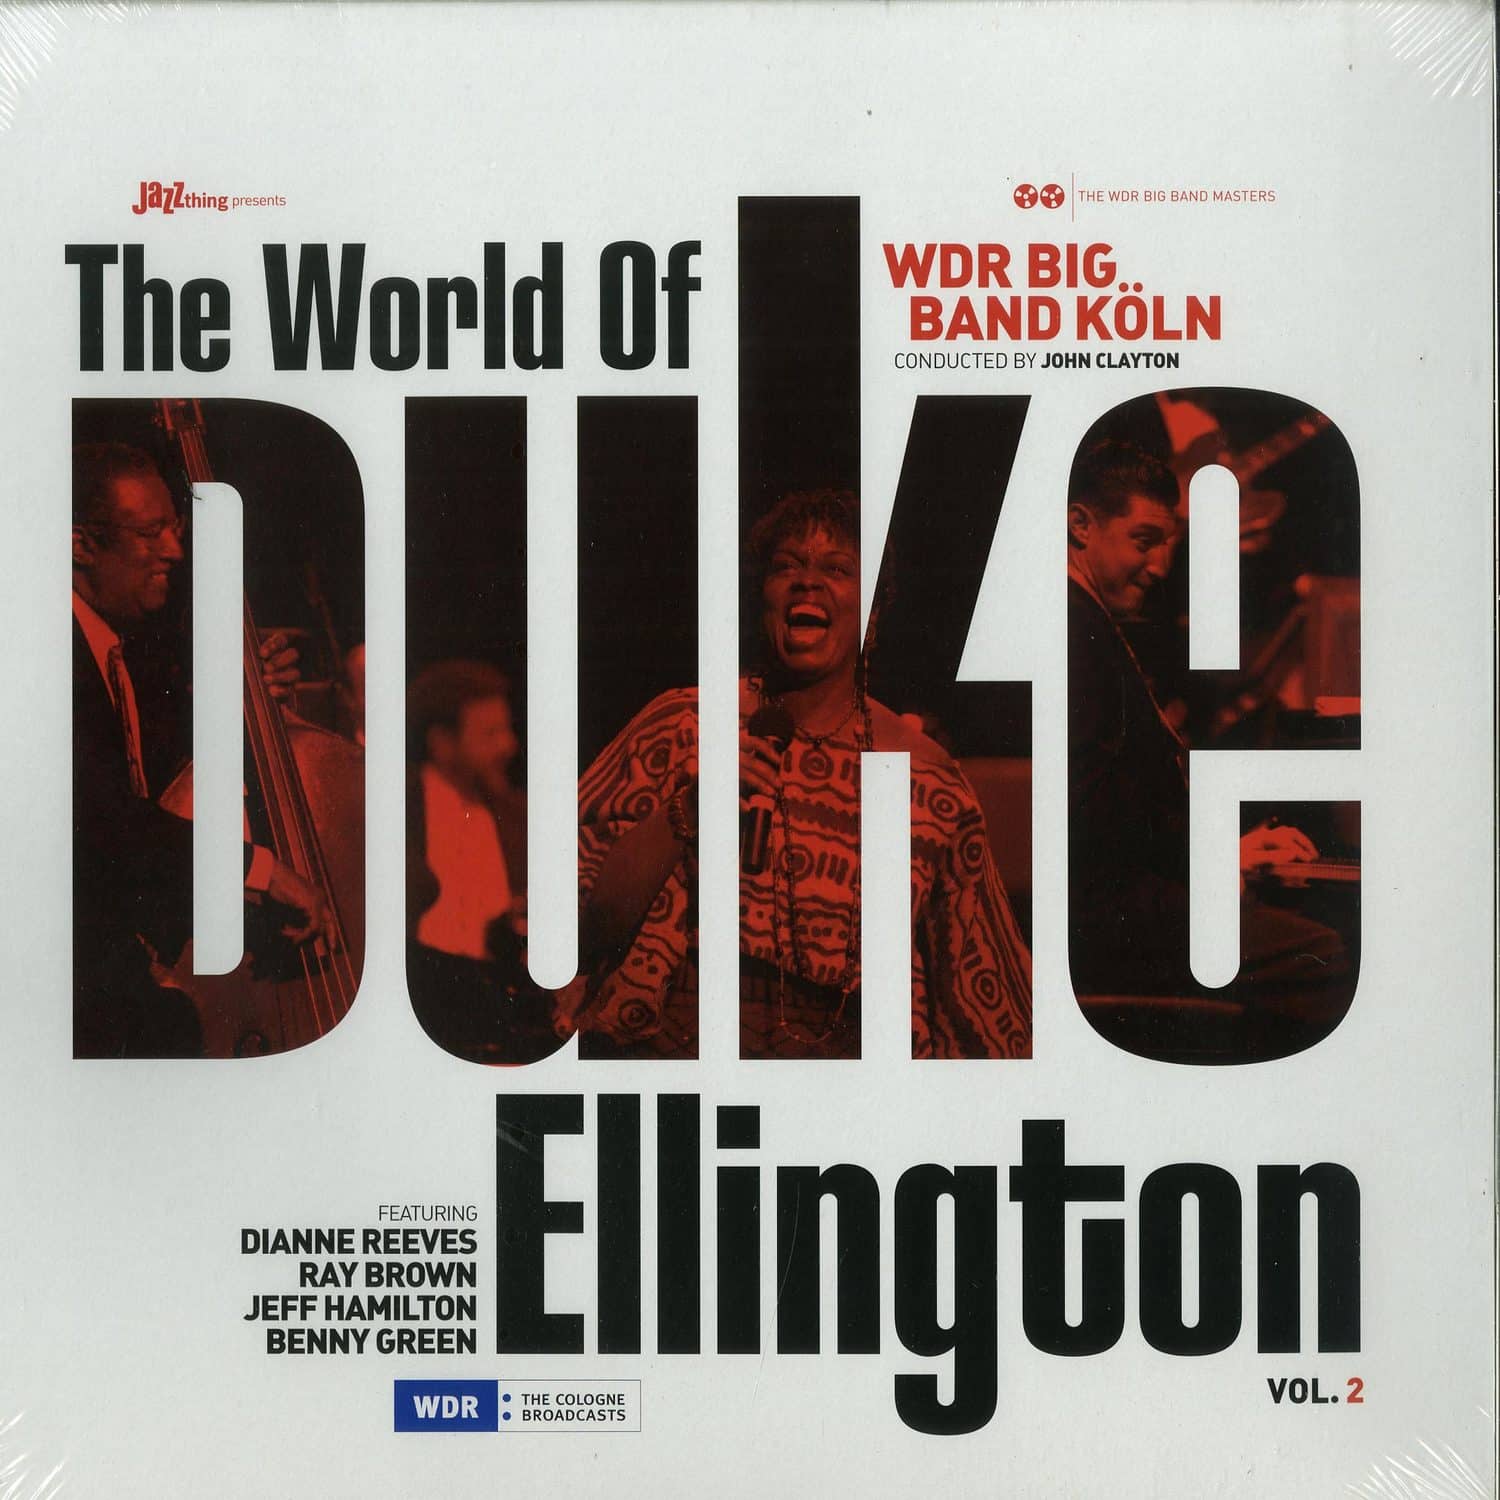 WDR Big Band Kln - THE WORLD OF DUKE ELLINGTON PART 2 